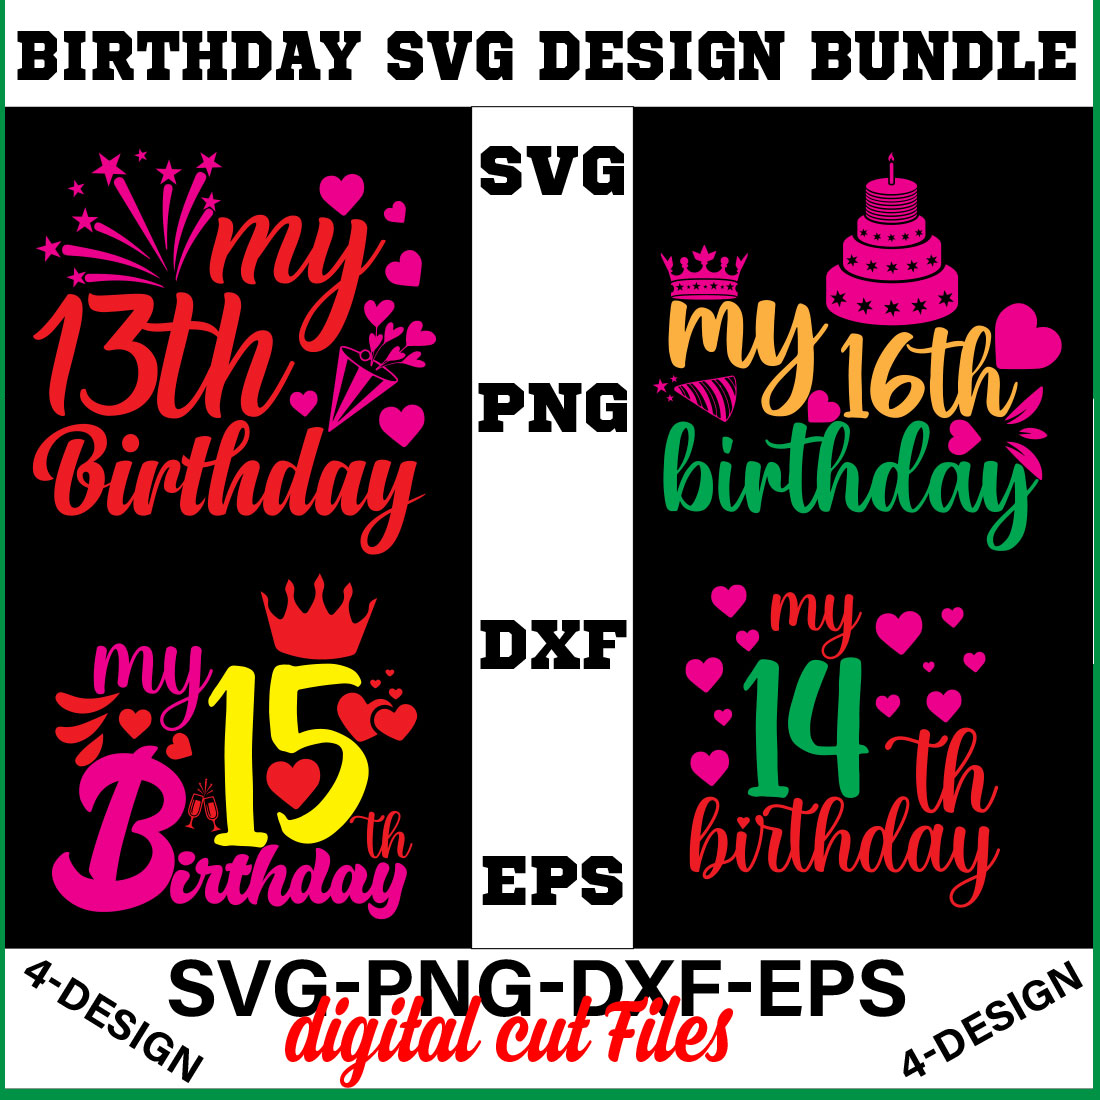 birthday svg design bundle Happy birthday svg bundle hand lettered birthday svg birthday party svg Volume-04 cover image.